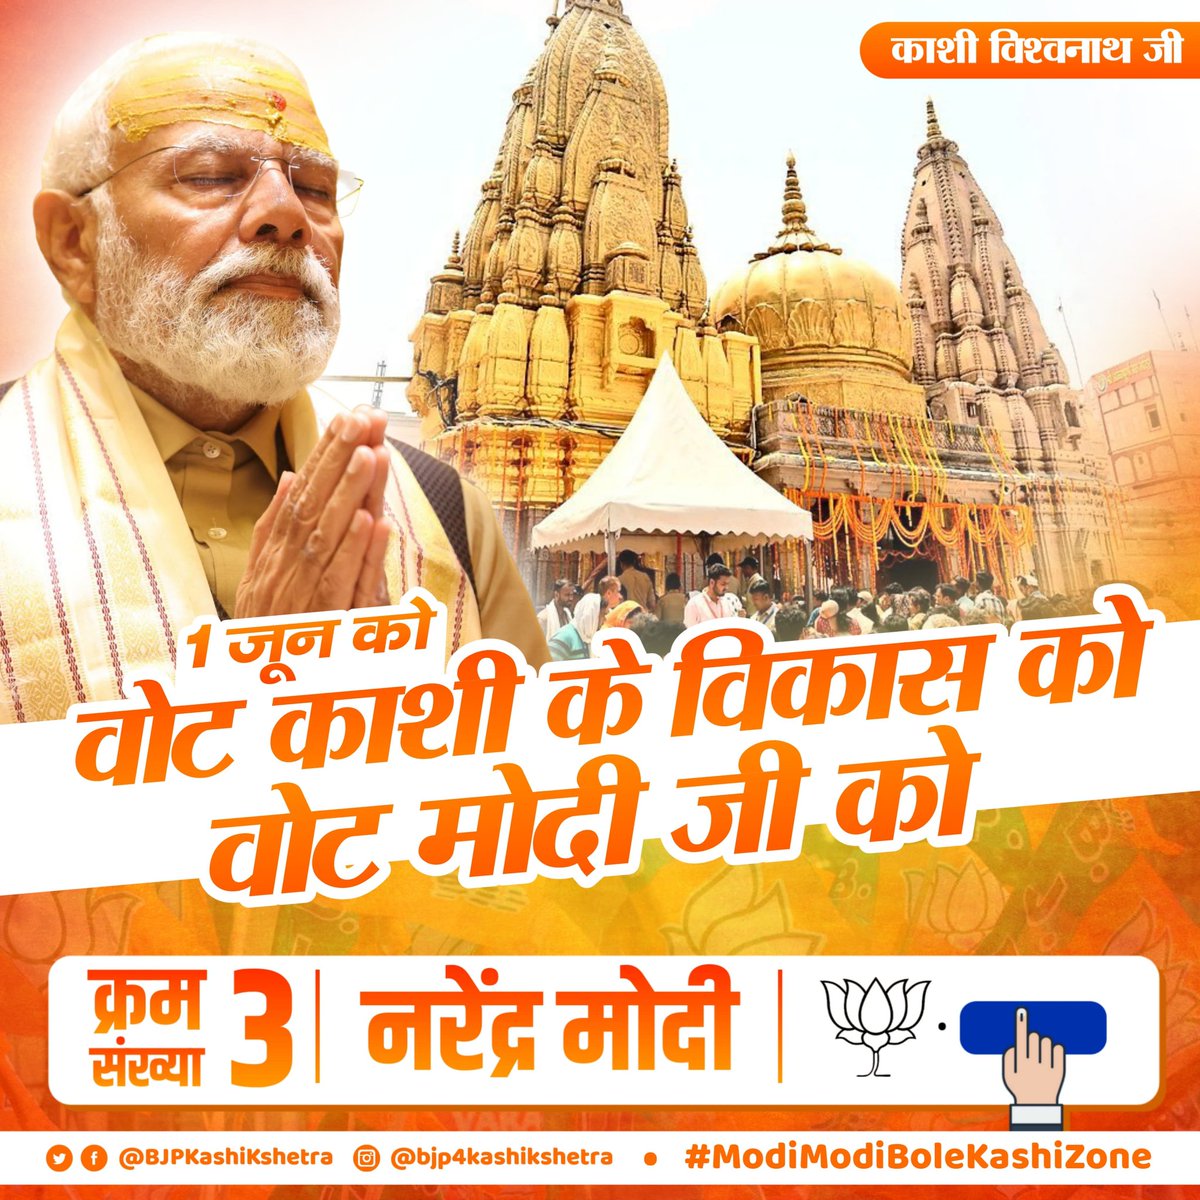 पहले मतदान फिर जलपान 
अपने मताधिकार का प्रयोग कर मतदान जरूर करें
1 जून को वोट जरूर करे 
#SankalpitKashi
#PhirEkBaarModiSarkar 
#AbkiBaar400Paar 
#Vote4ModiJi
#ModiKiGuarantee 
काशी बनारस वाराणसी Kashi Banaras Varanasi